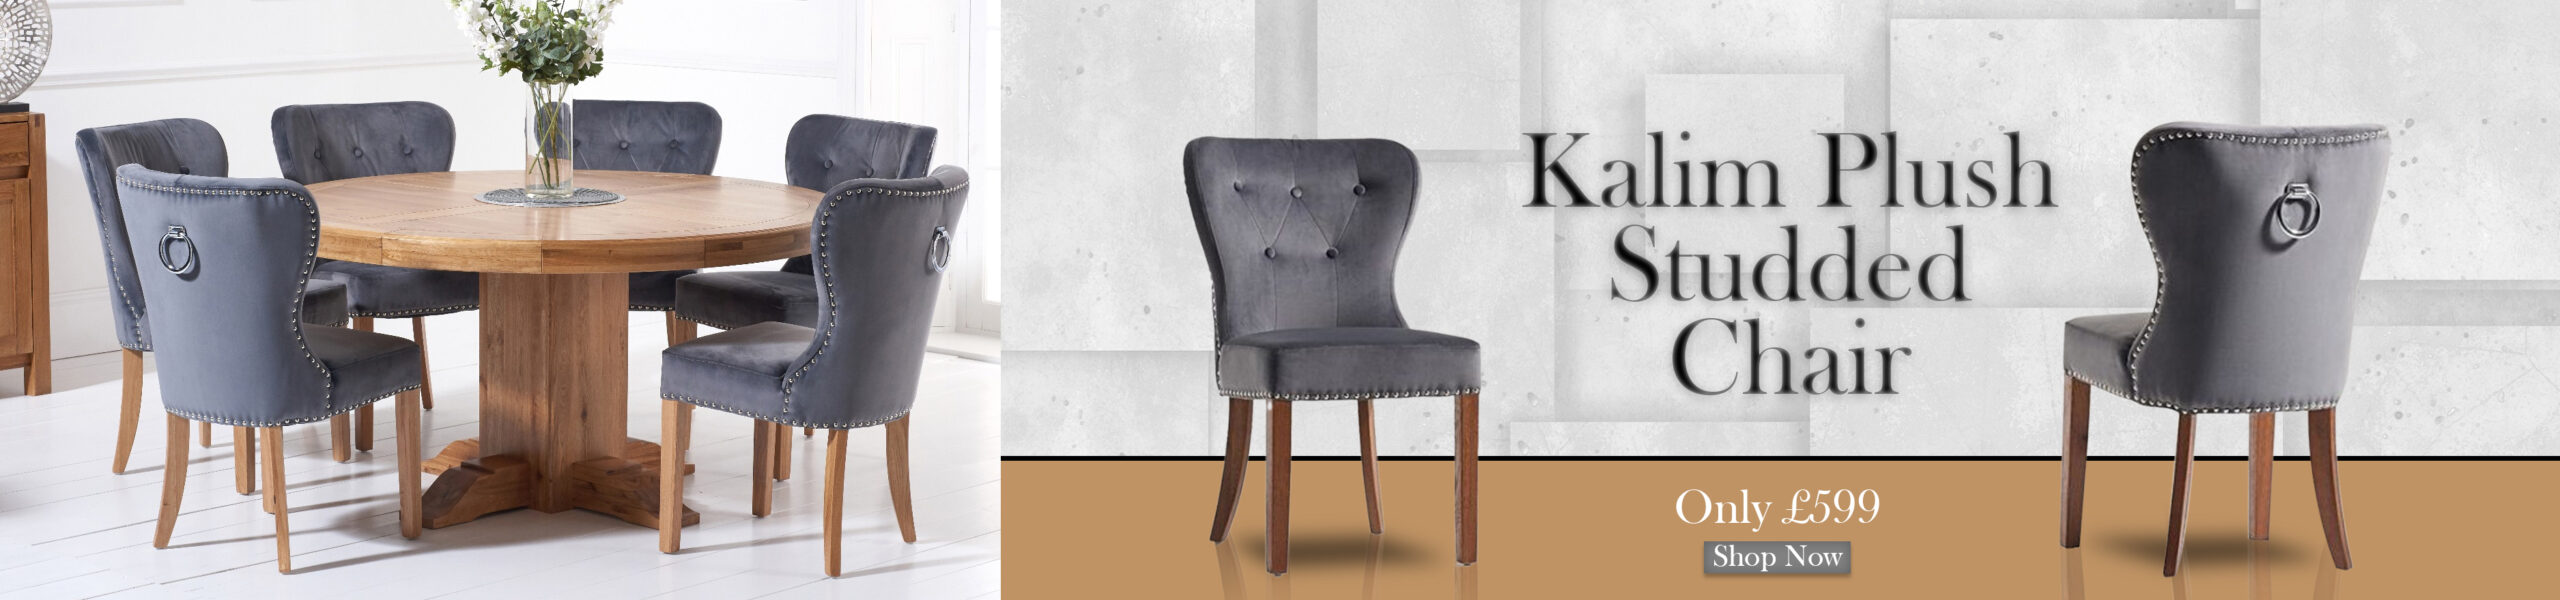 FADS Kalim Plush Studded Chair